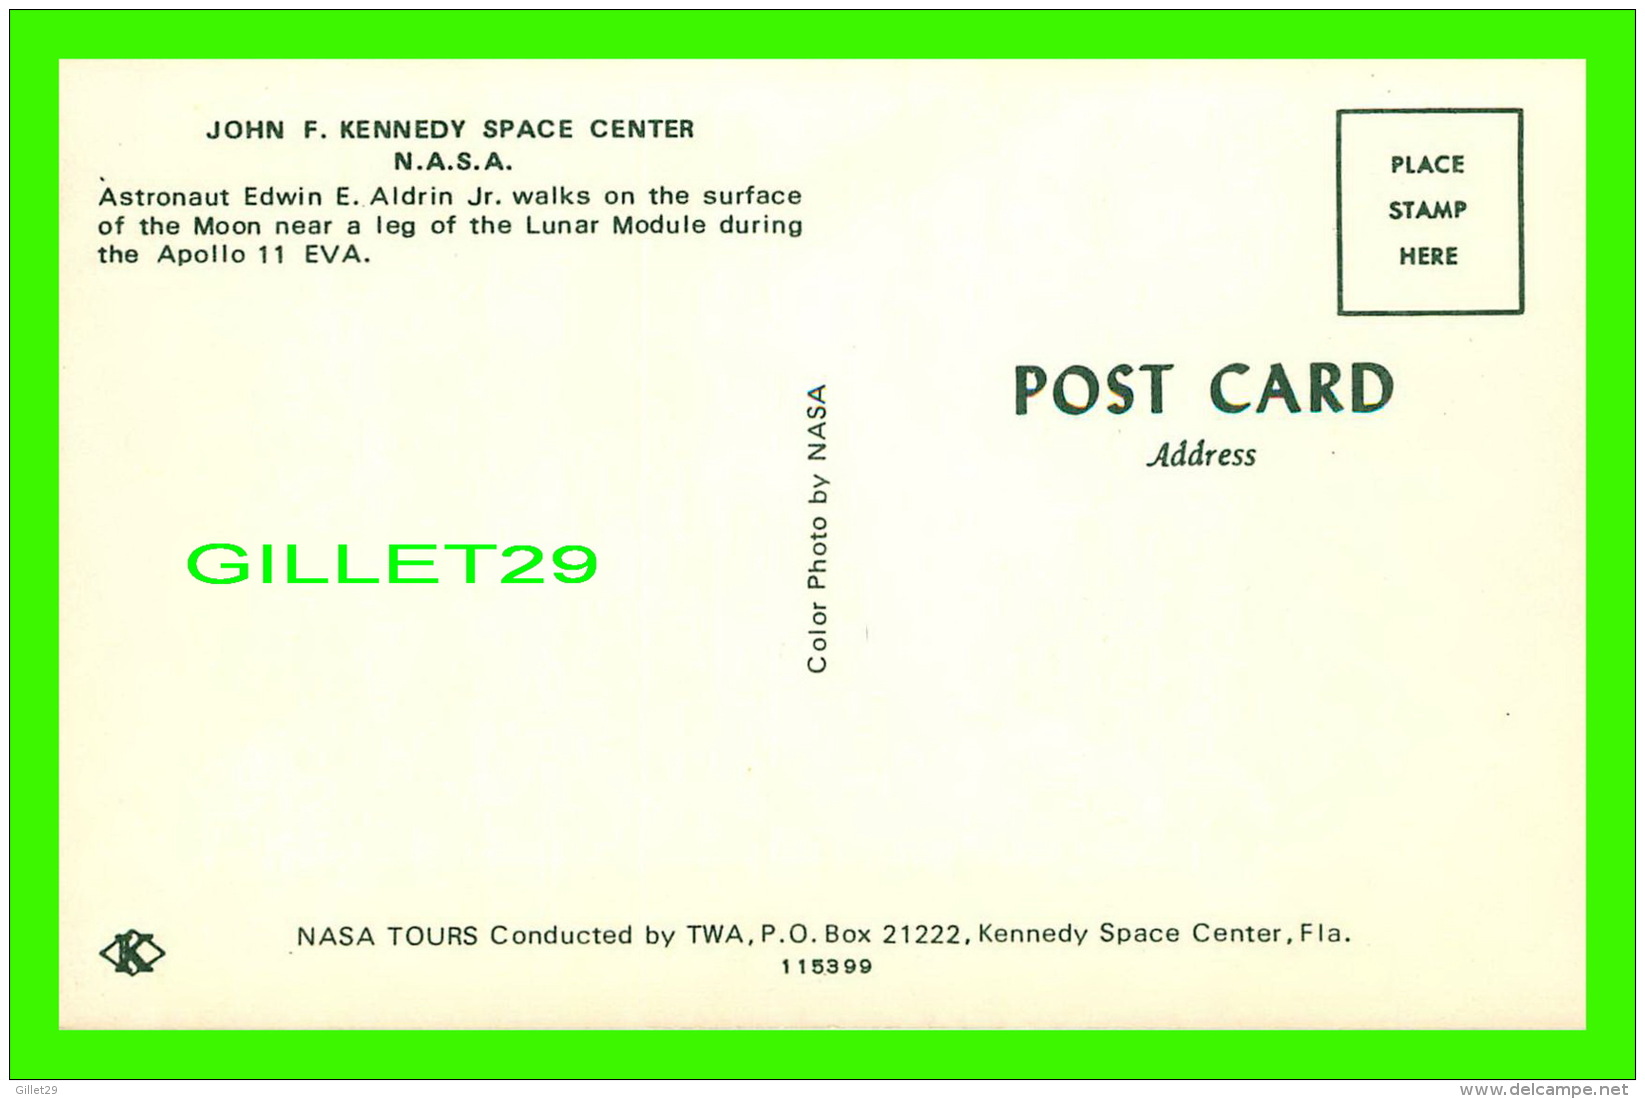 TRANSPORTS, ESPACE - JOHN F. KENNEDY SPACE CENTER N.A.S..A. - ASTRONAUT EDWINN ALDRIN Jr ON THE MOON APOLLO 11 EVA - - Raumfahrt